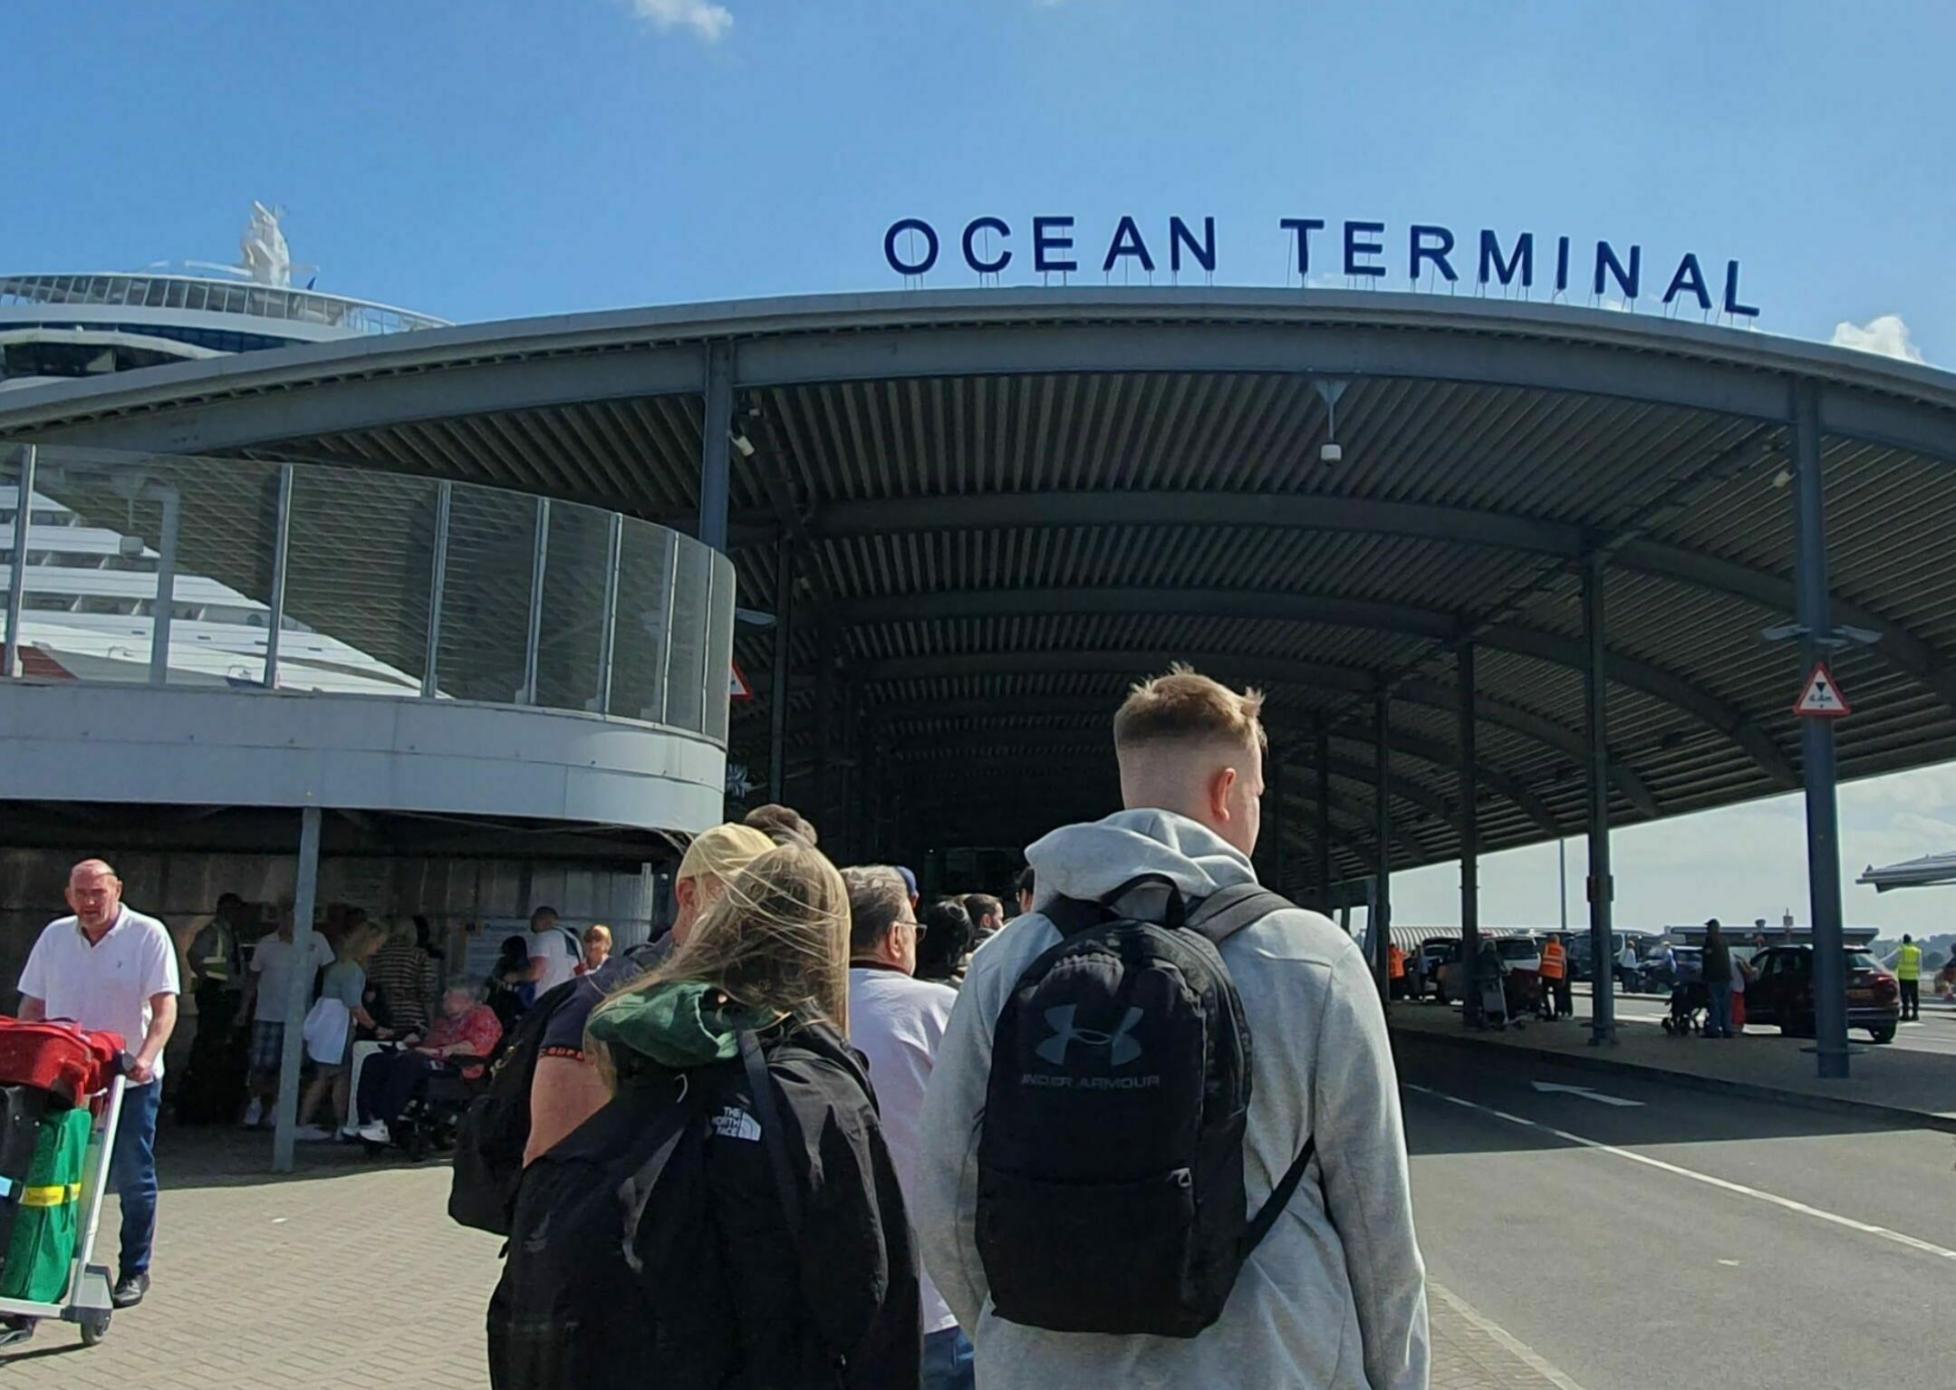 Ocean Terminal Cruise passengers outside terminal